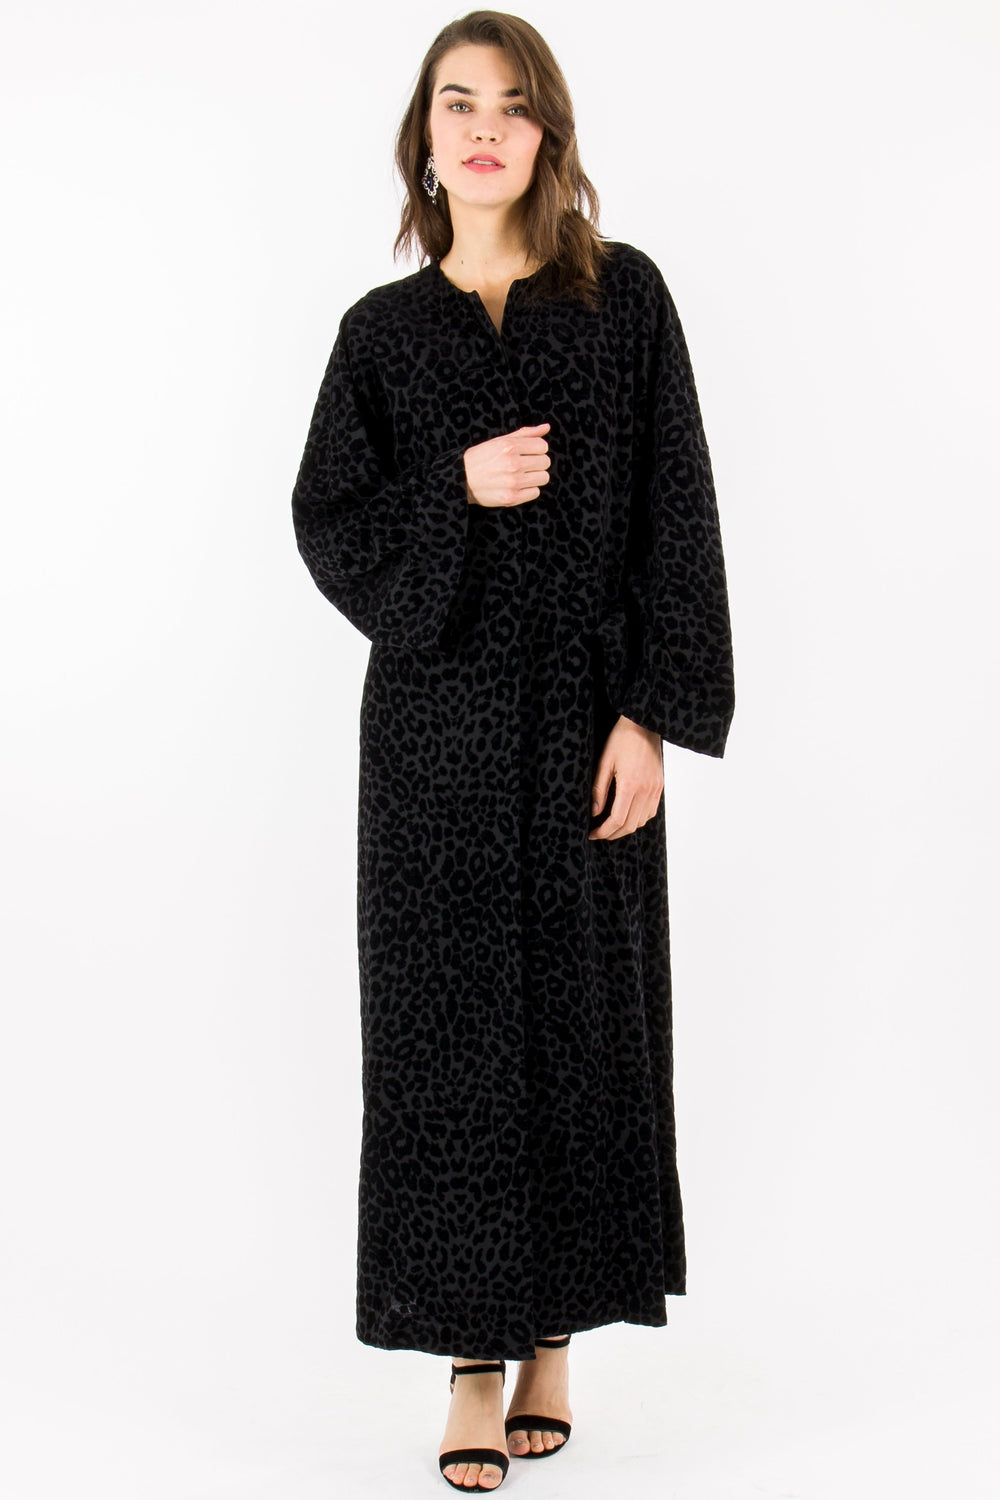 STORE WF Leopard Velvet Abaya Modest Long Sleeve Loose Black Abaya with Embossed Leopard Print